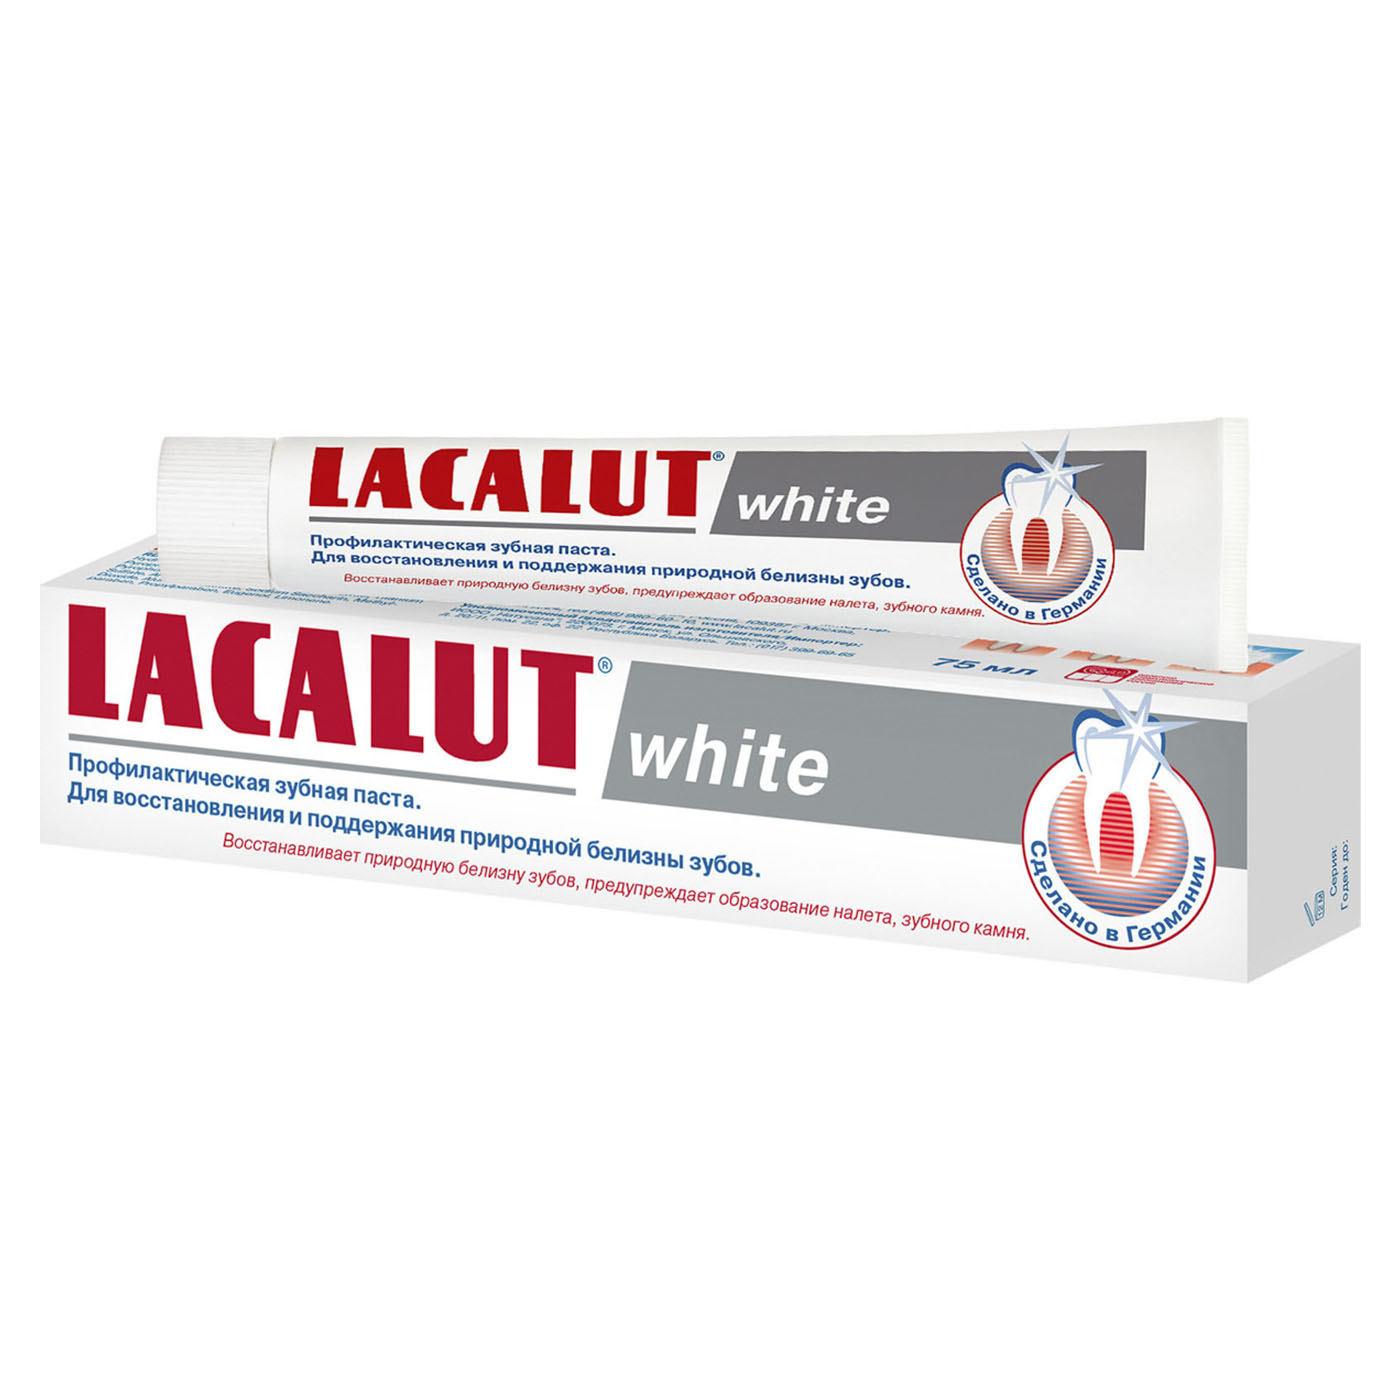 Lacalut Зубная паста Уайт 75 мл (Lacalut, Зубные пасты) от Pharmacosmetica.ru